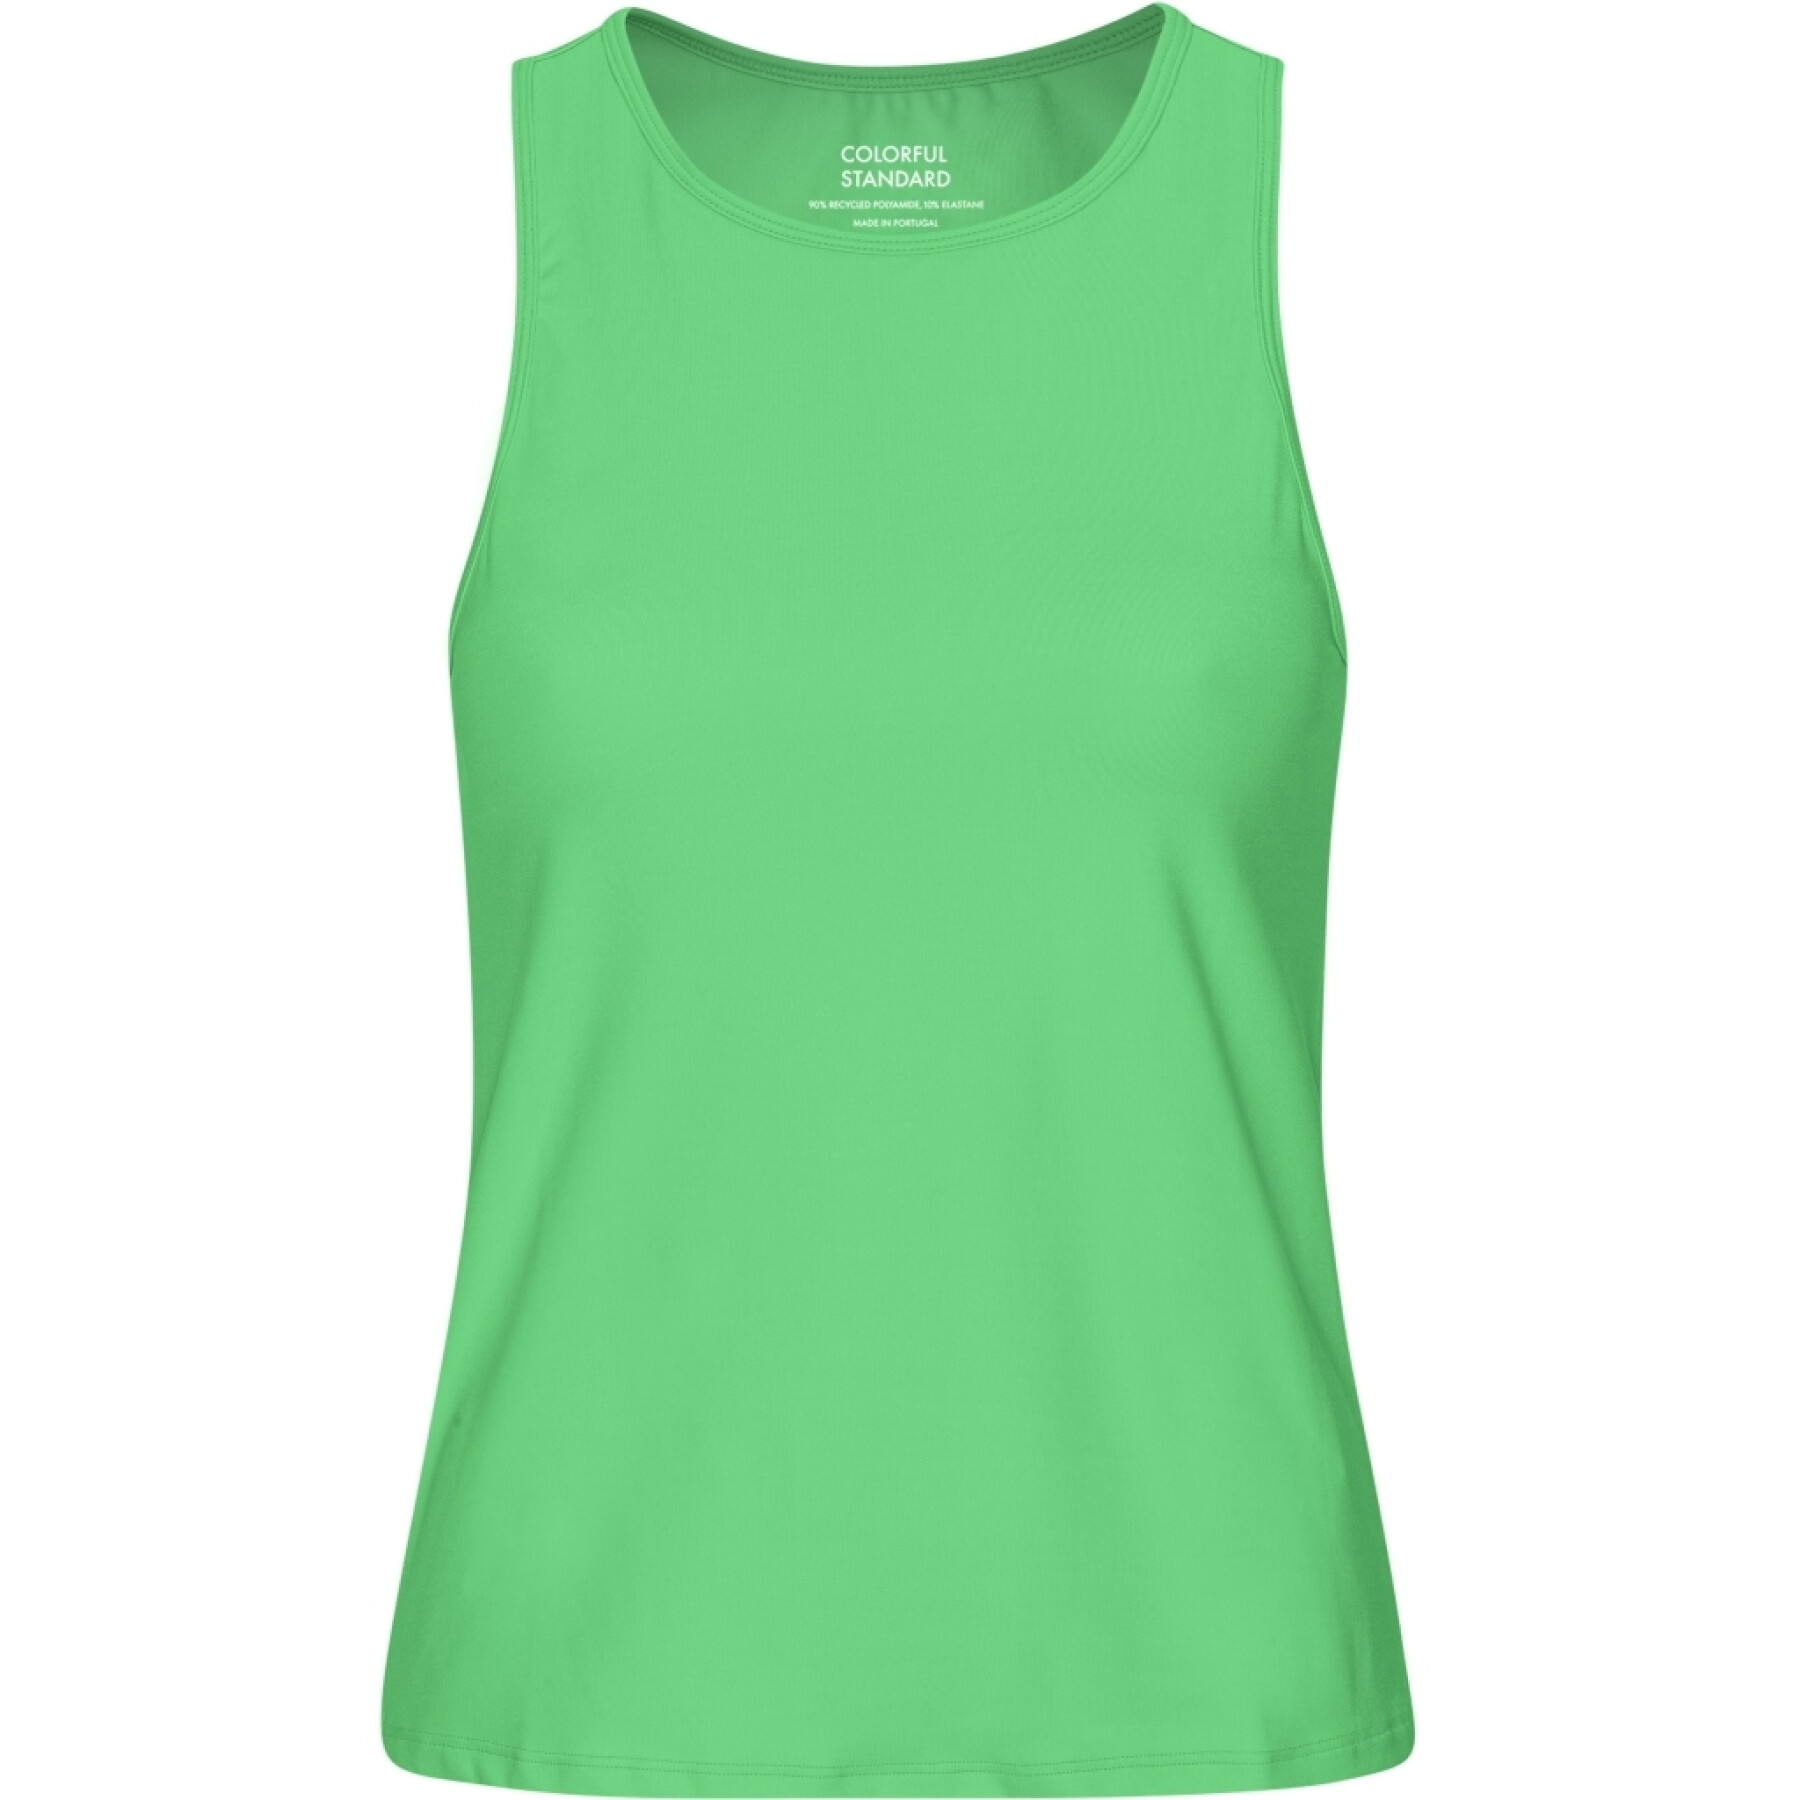 Damen-Top Colorful Standard Active Spring Green